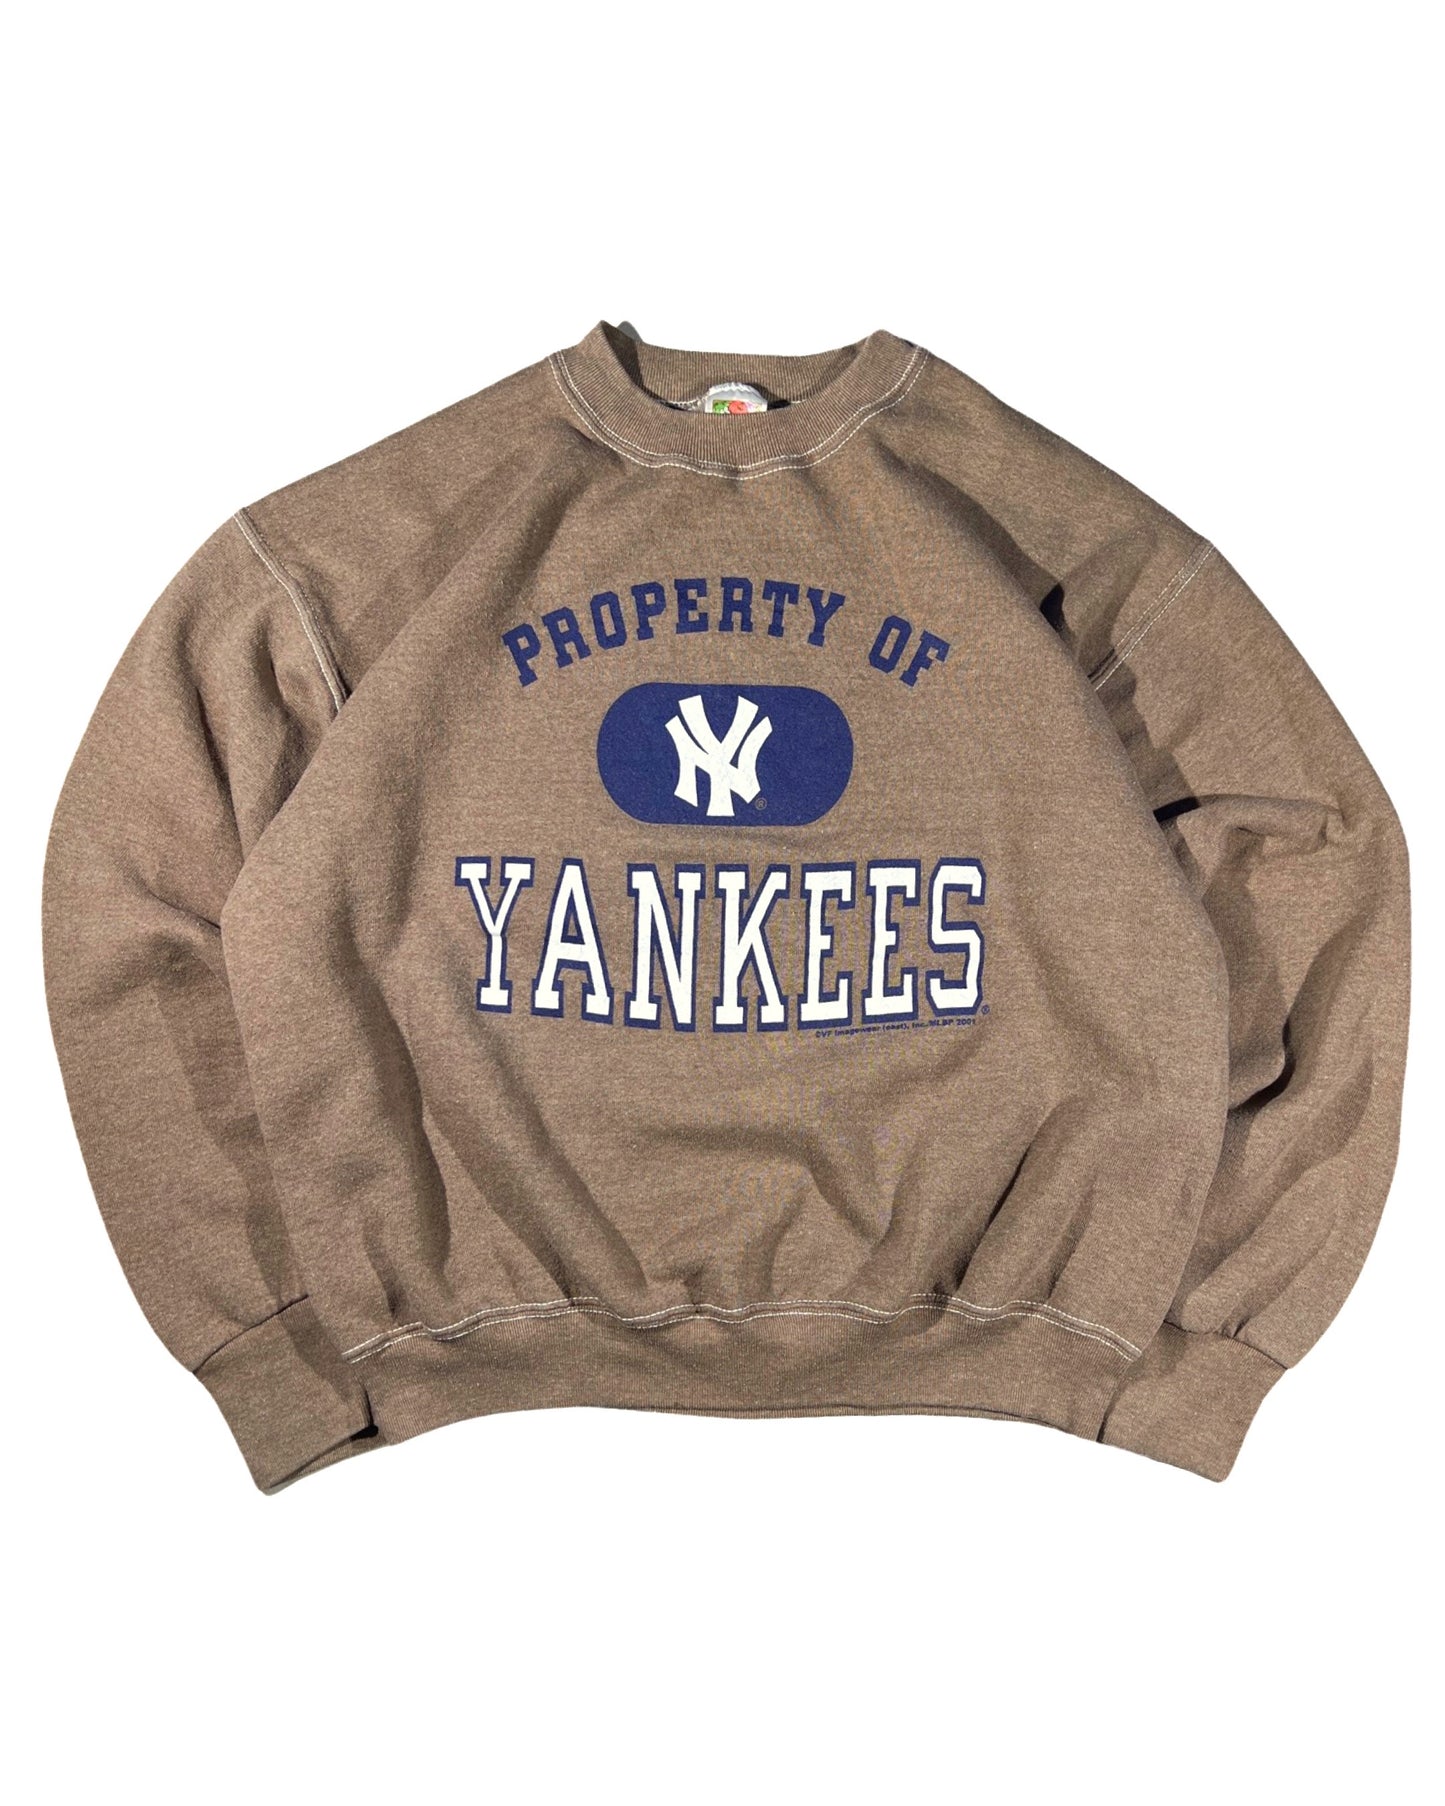 Vintage NY Yankees Crew - M